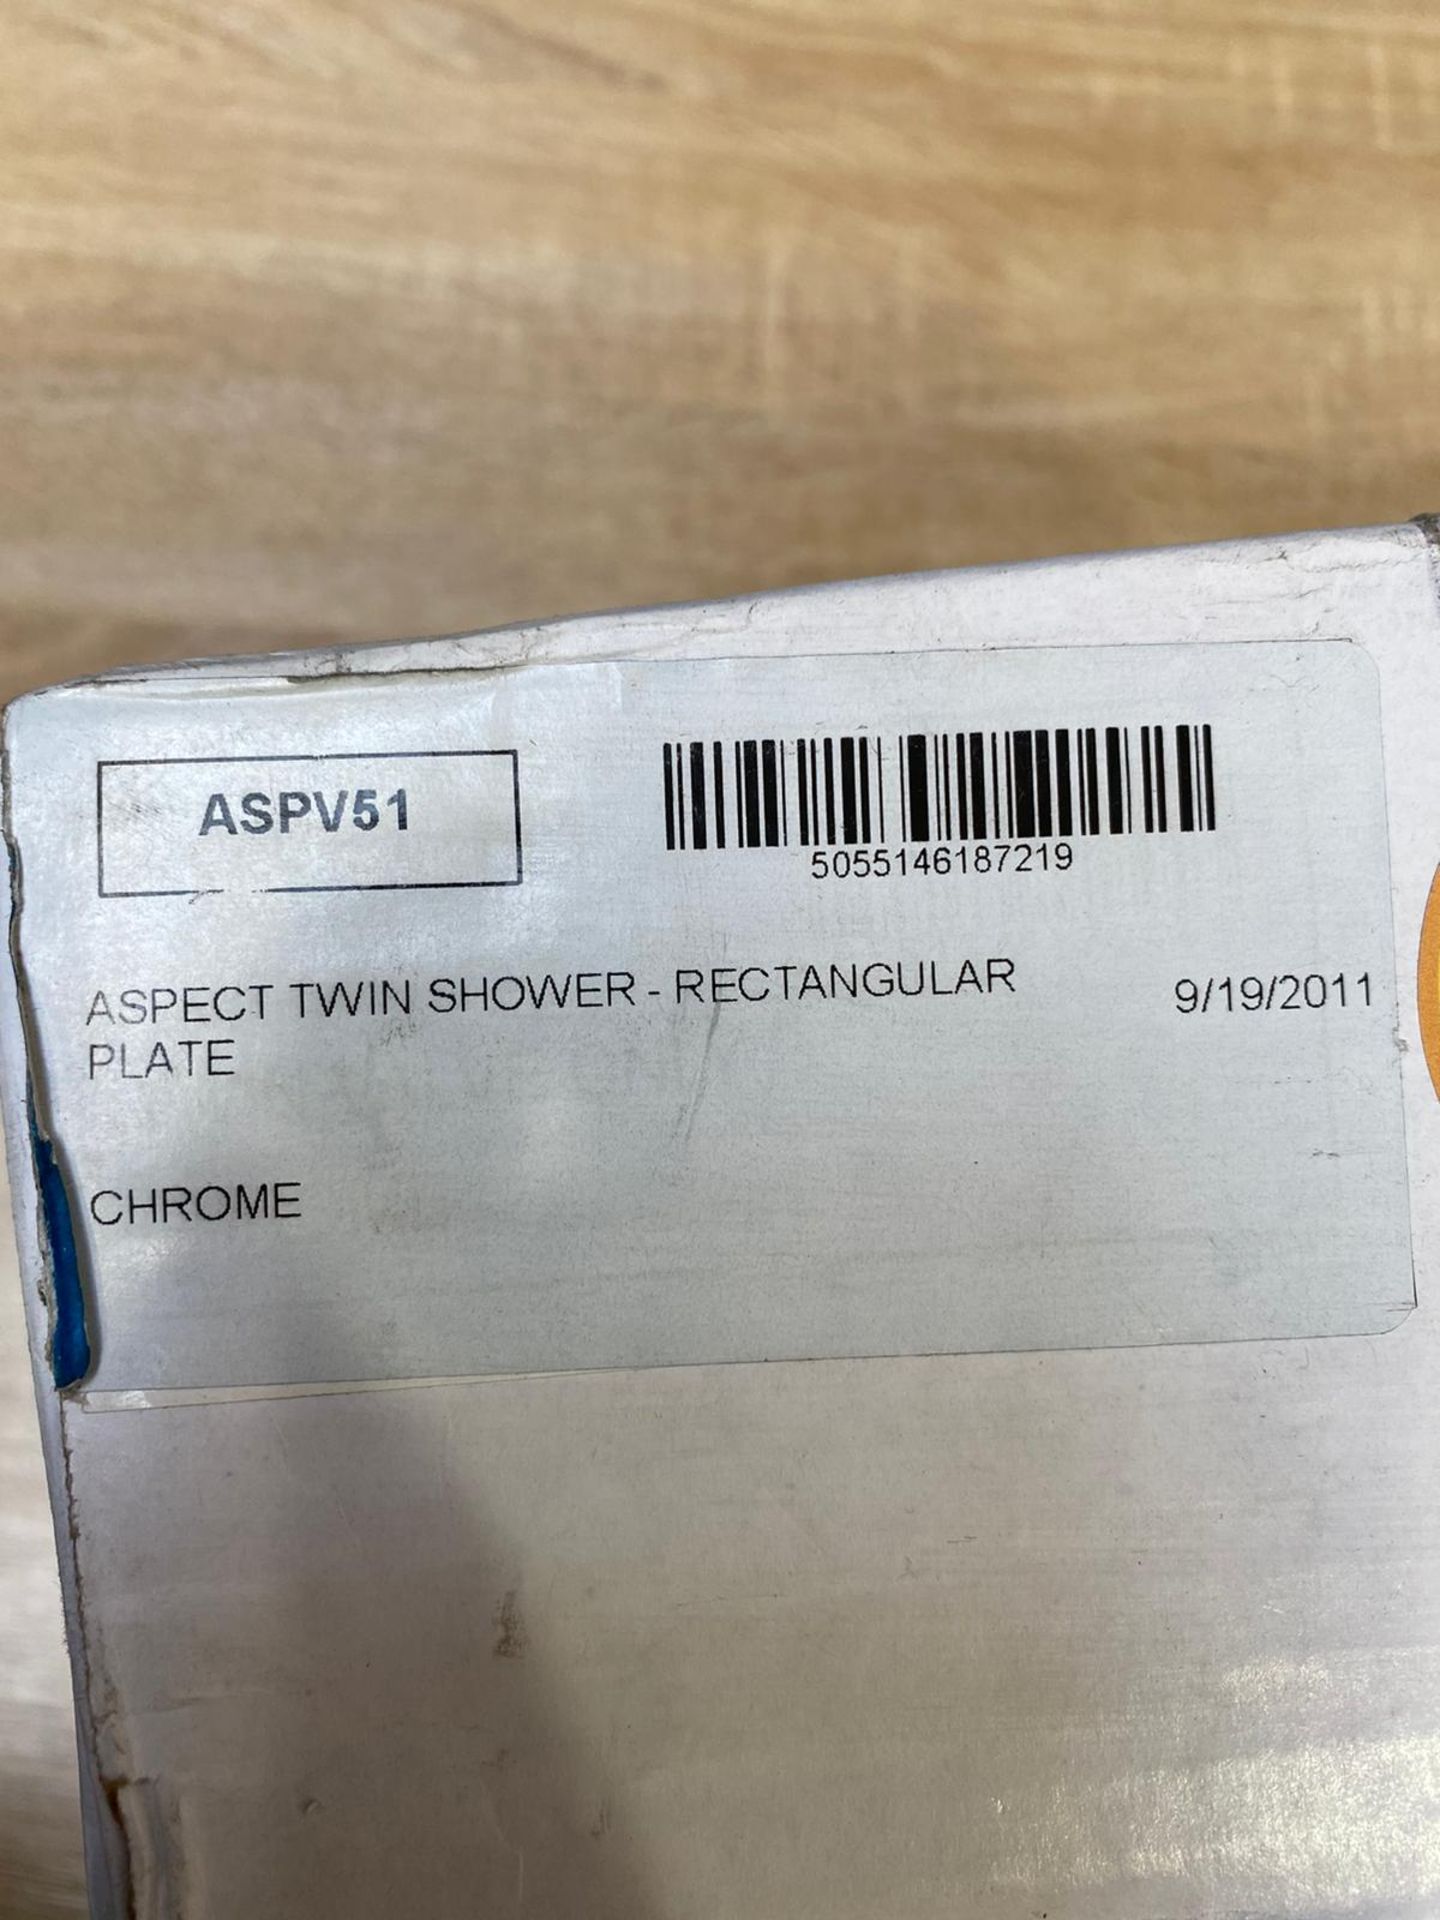 1 x Aspect Twin Shower Rectangular Plate in Chrome - Code: ASPV51 - New Stock - Location: Altrincham - Image 3 of 3